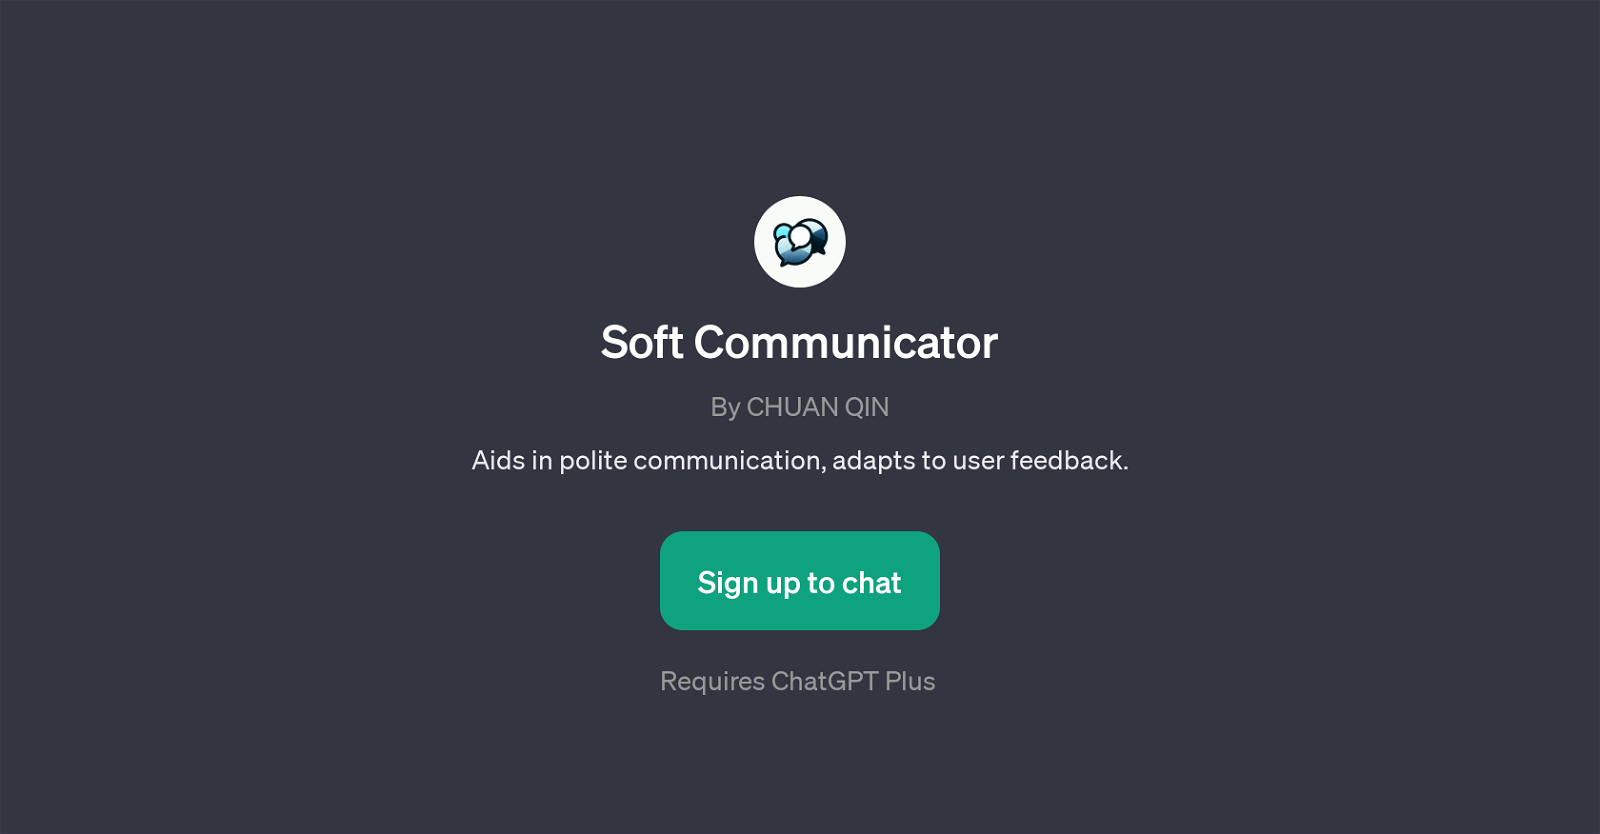 Soft Communicator website